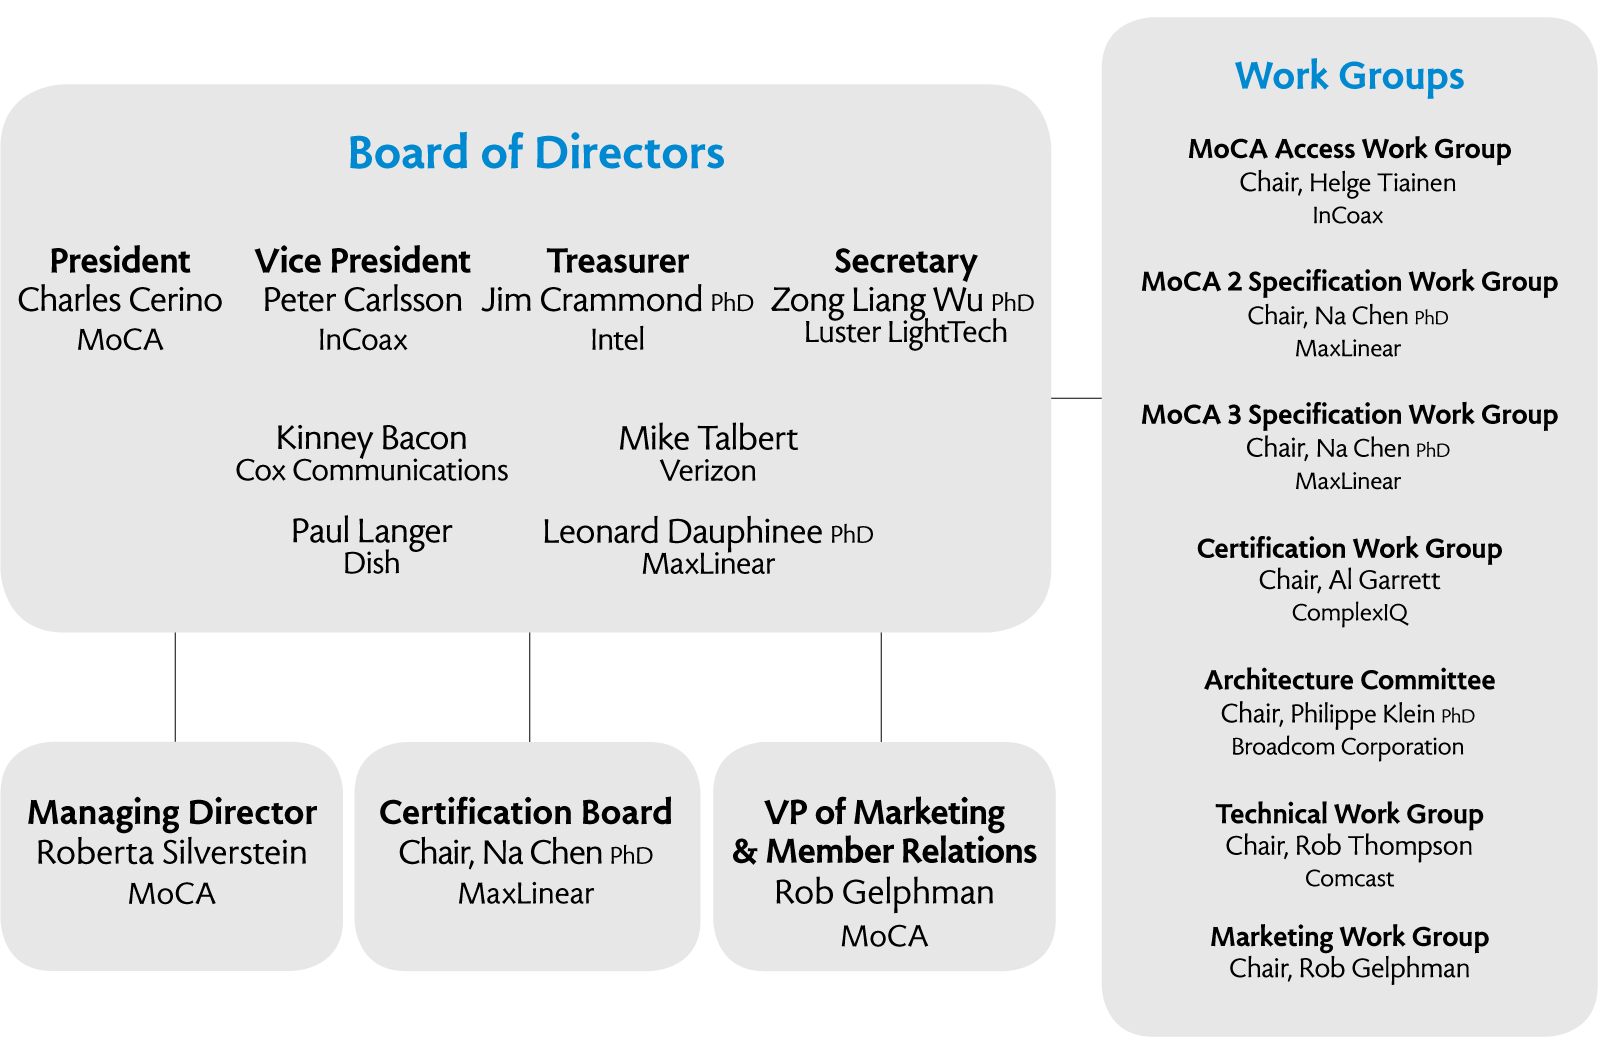 Asus Organizational Chart